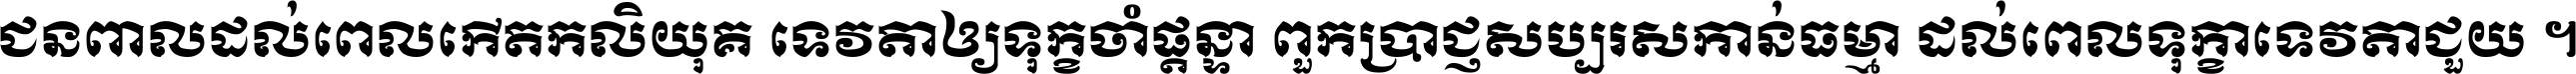 Khmer OS Muol